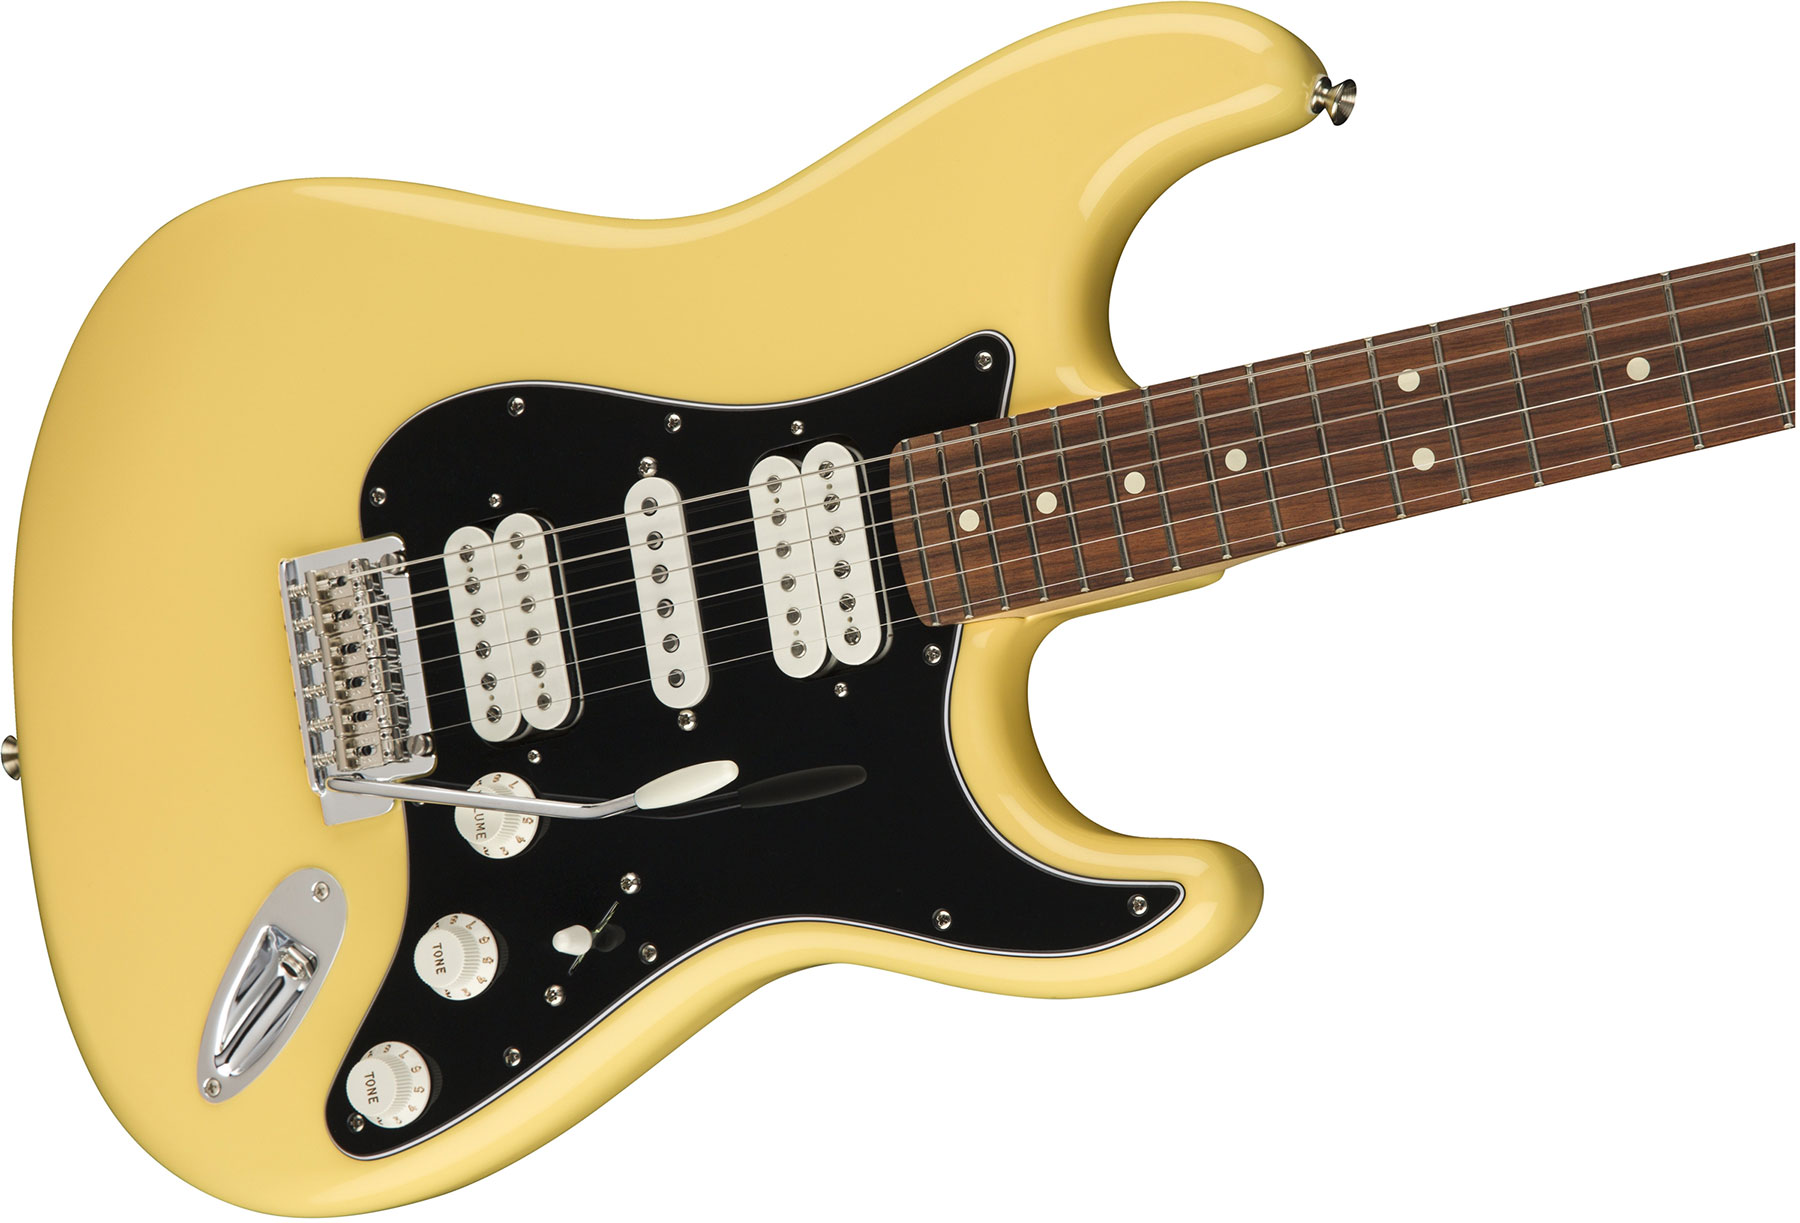 Fender Strat Player Mex Hsh Pf - Buttercream - Str shape electric guitar - Variation 2